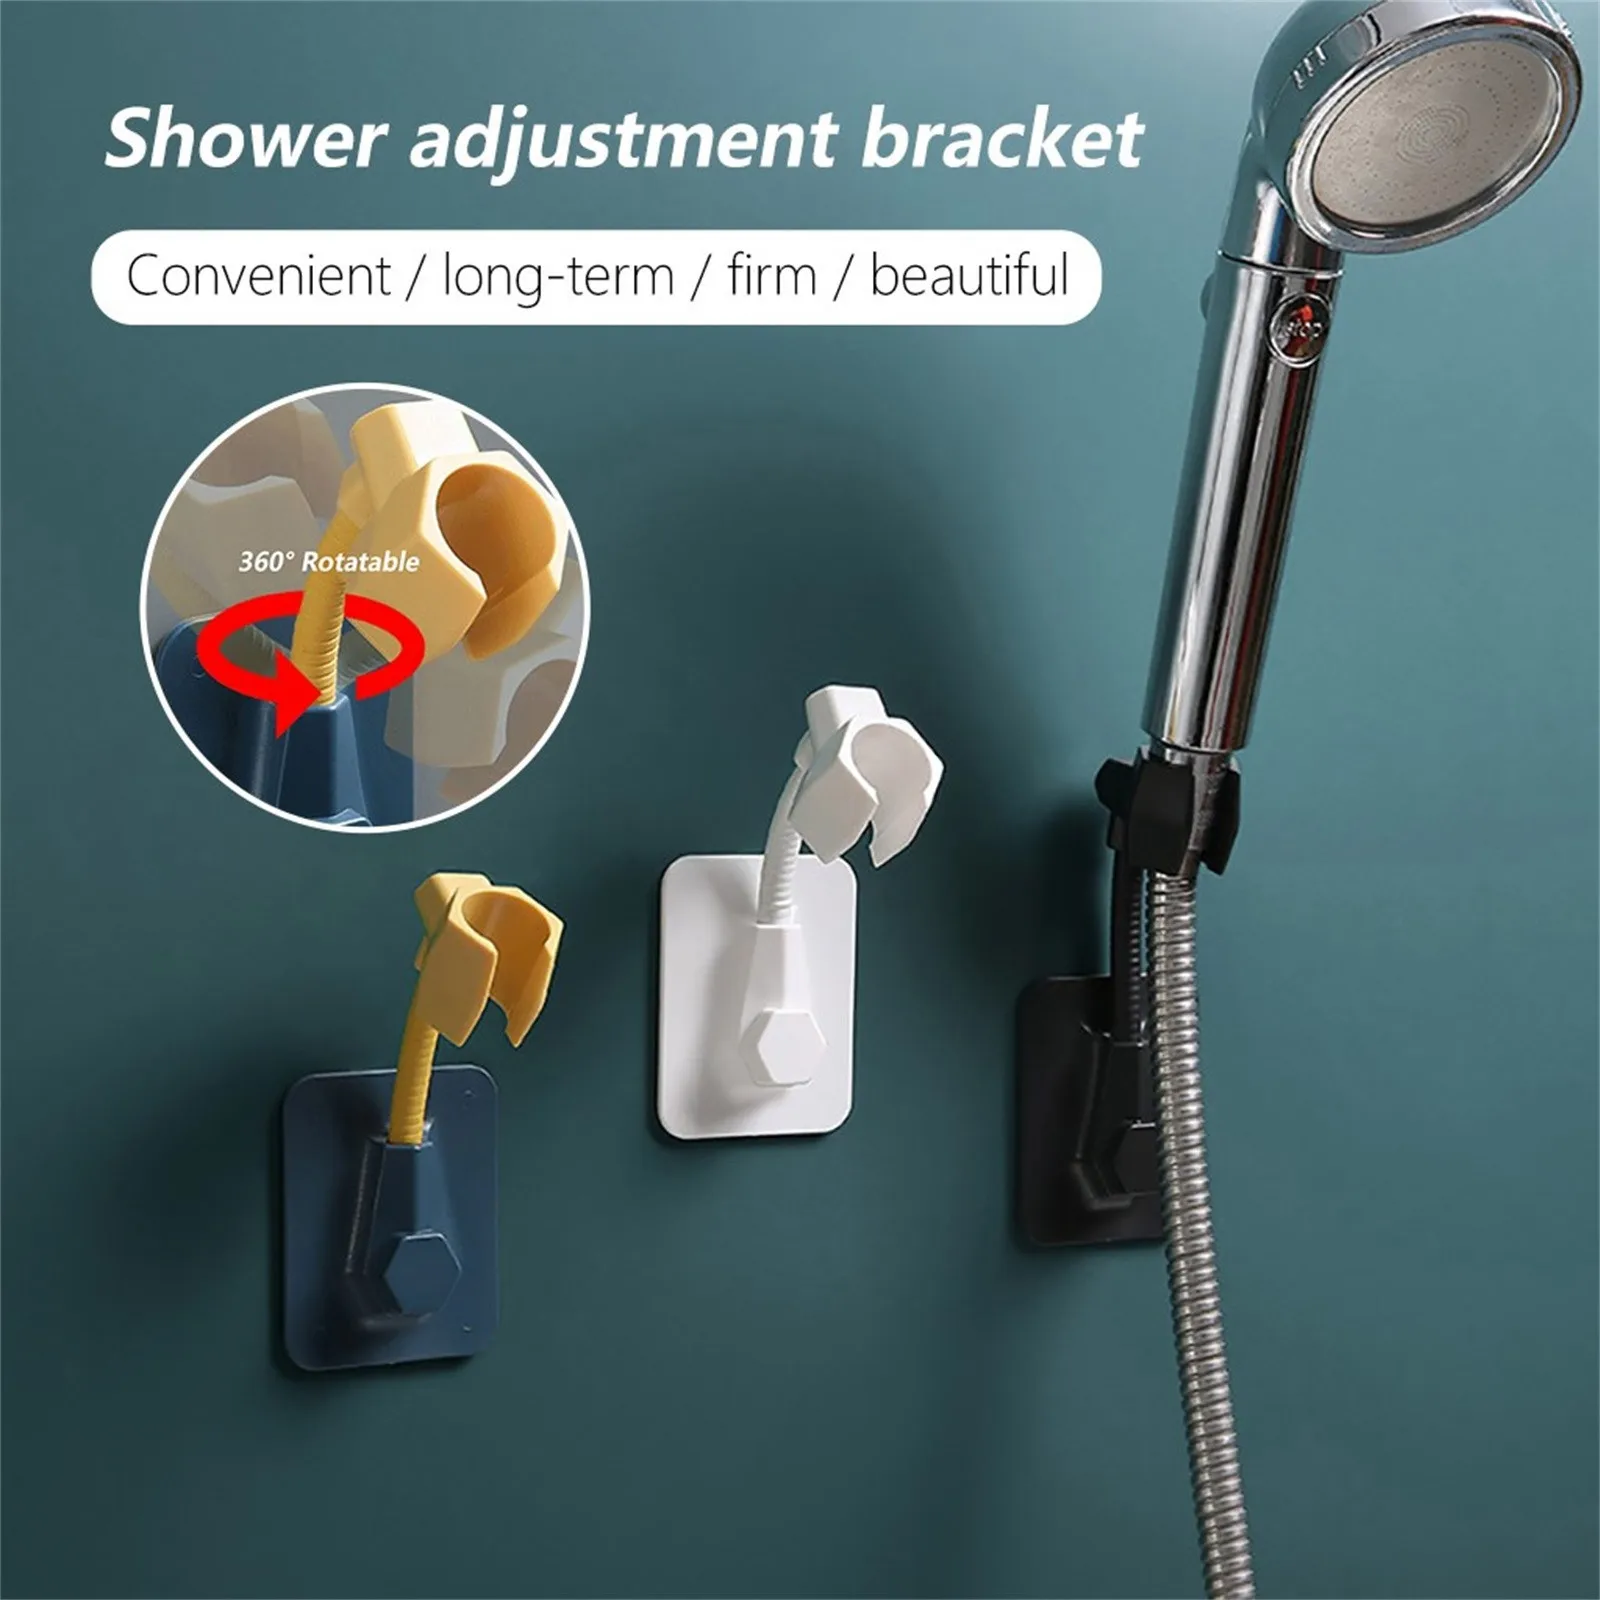 Universal Adjustable Shower Bracket Stand Holder Rotatable for Bathroom Kit New 